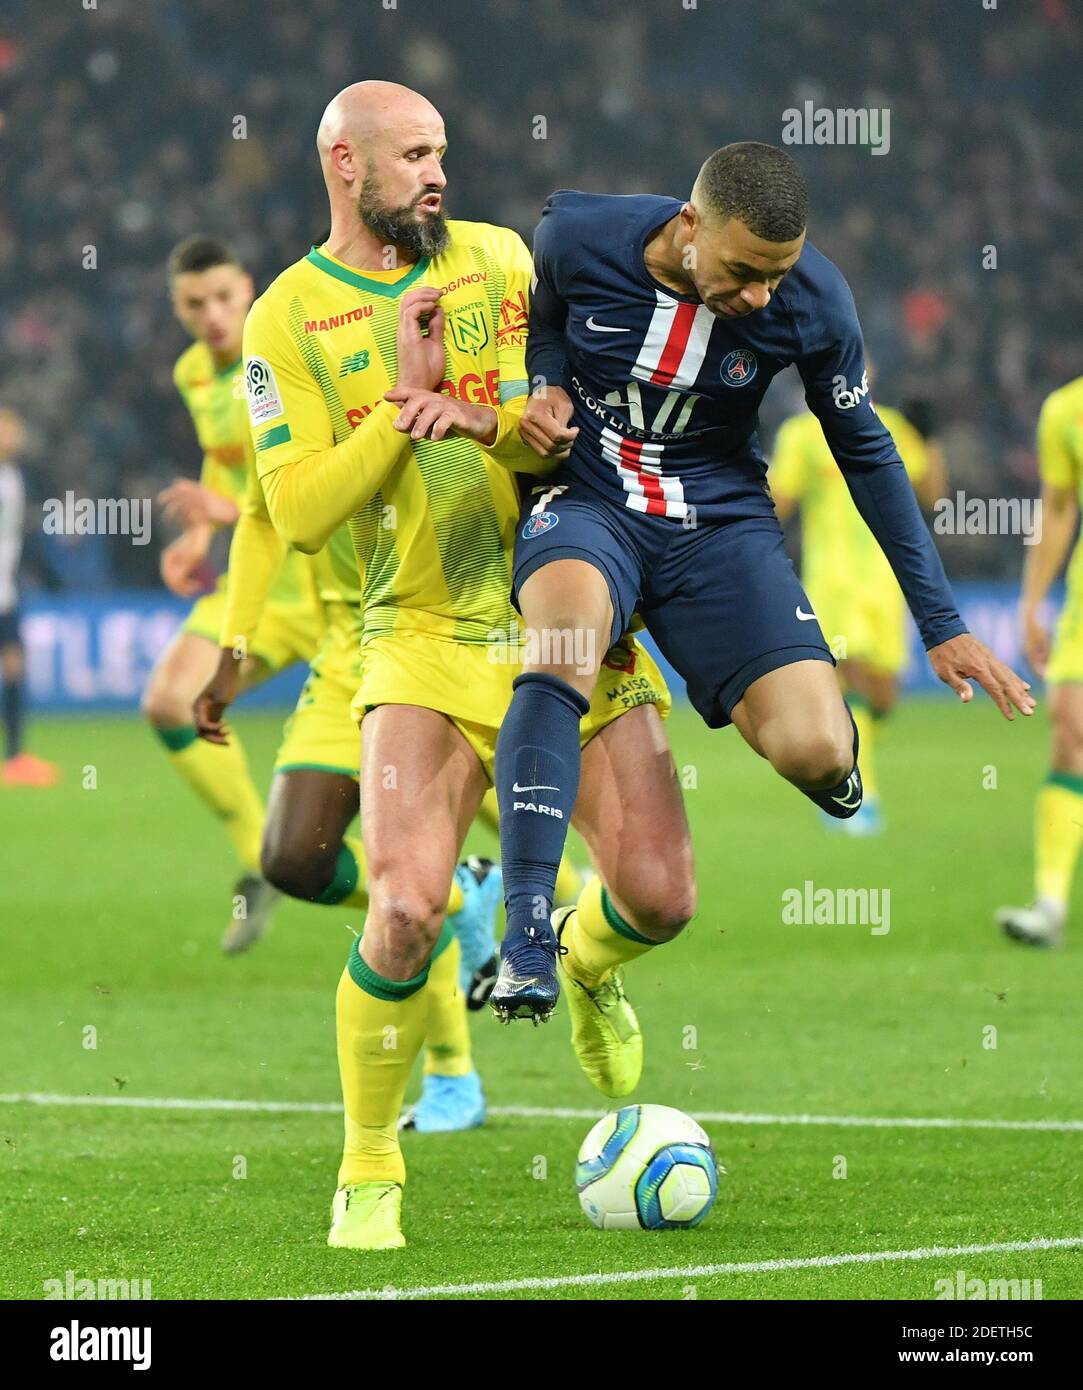 Kylian Mbappe del PSG durante la partita di calcio Ligue 1 Paris Saint- Germain (PSG) contro FC Nantes (FCN) allo stadio Parc des Princes di Parigi,  Francia, il 4 dicembre 2019. PSG ha